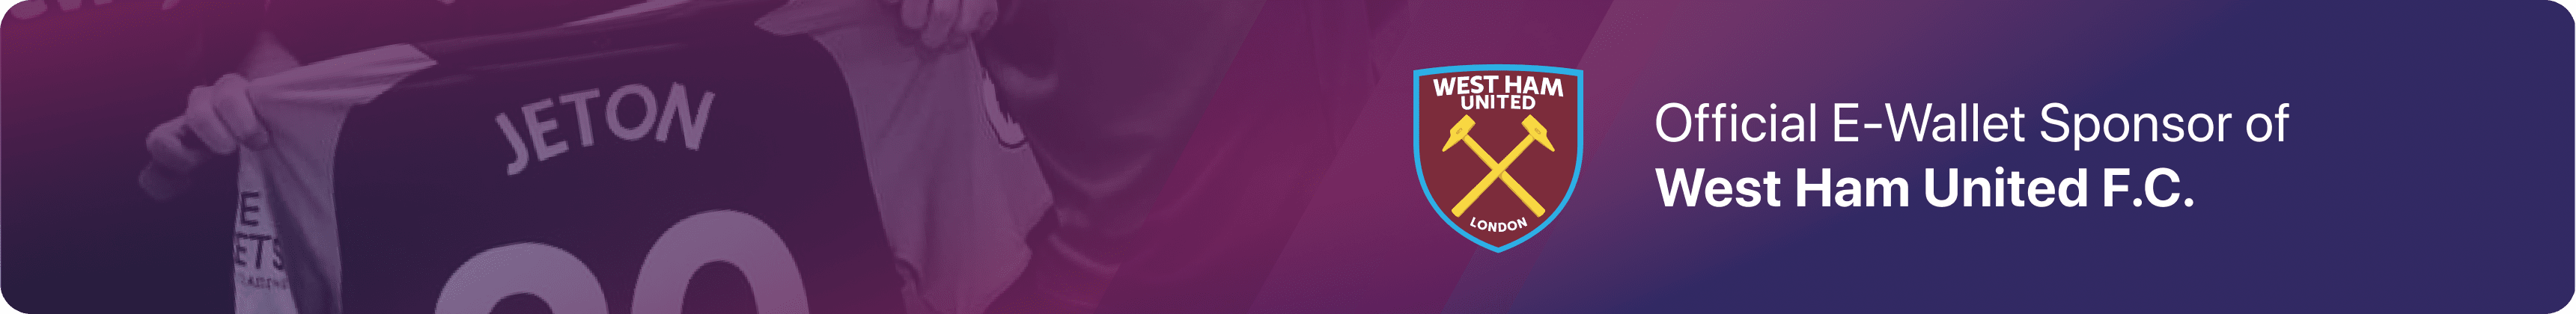 Official E-Wallet Partner of Aston Villa F.C. and West Ham United F.C.